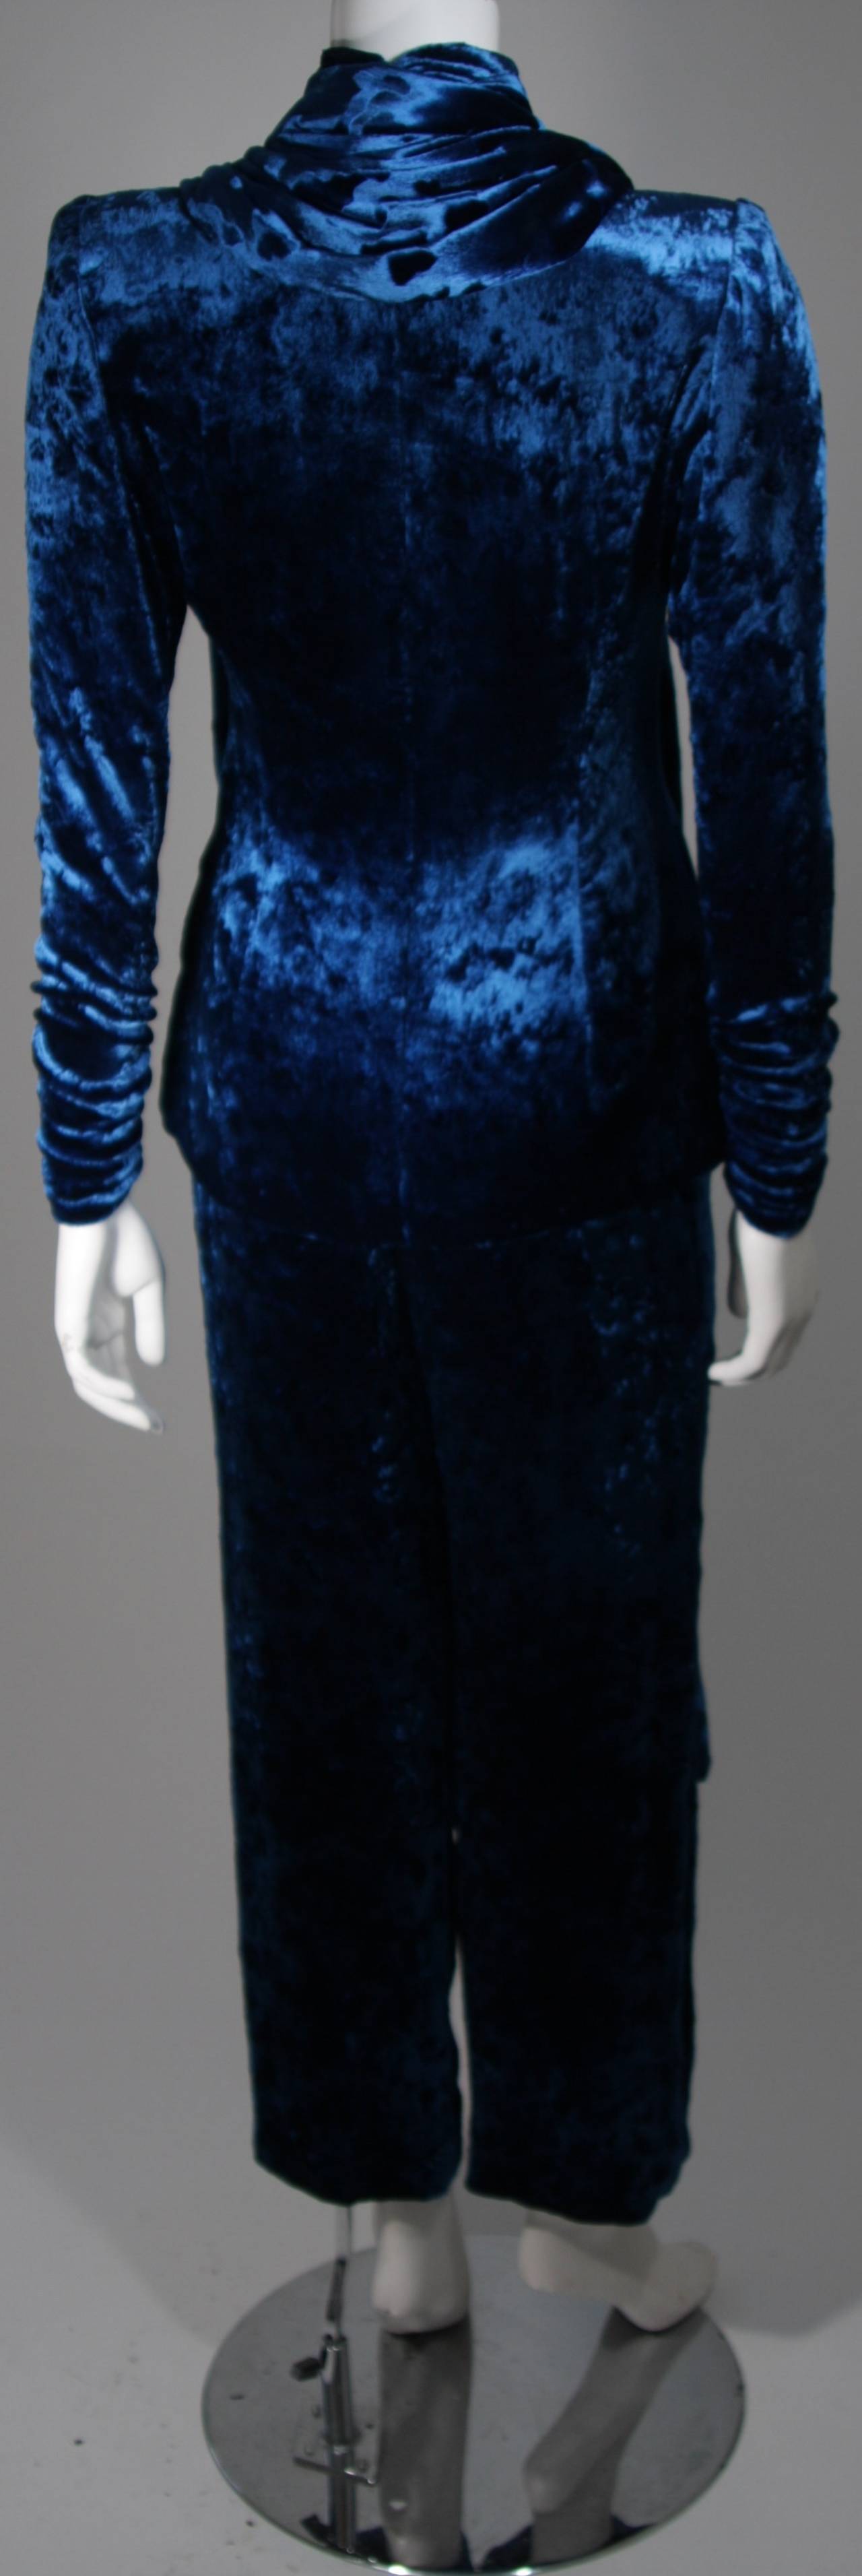 Galanos Couture Vibrant Blue Velvet Evening Ensemble Size Small 2